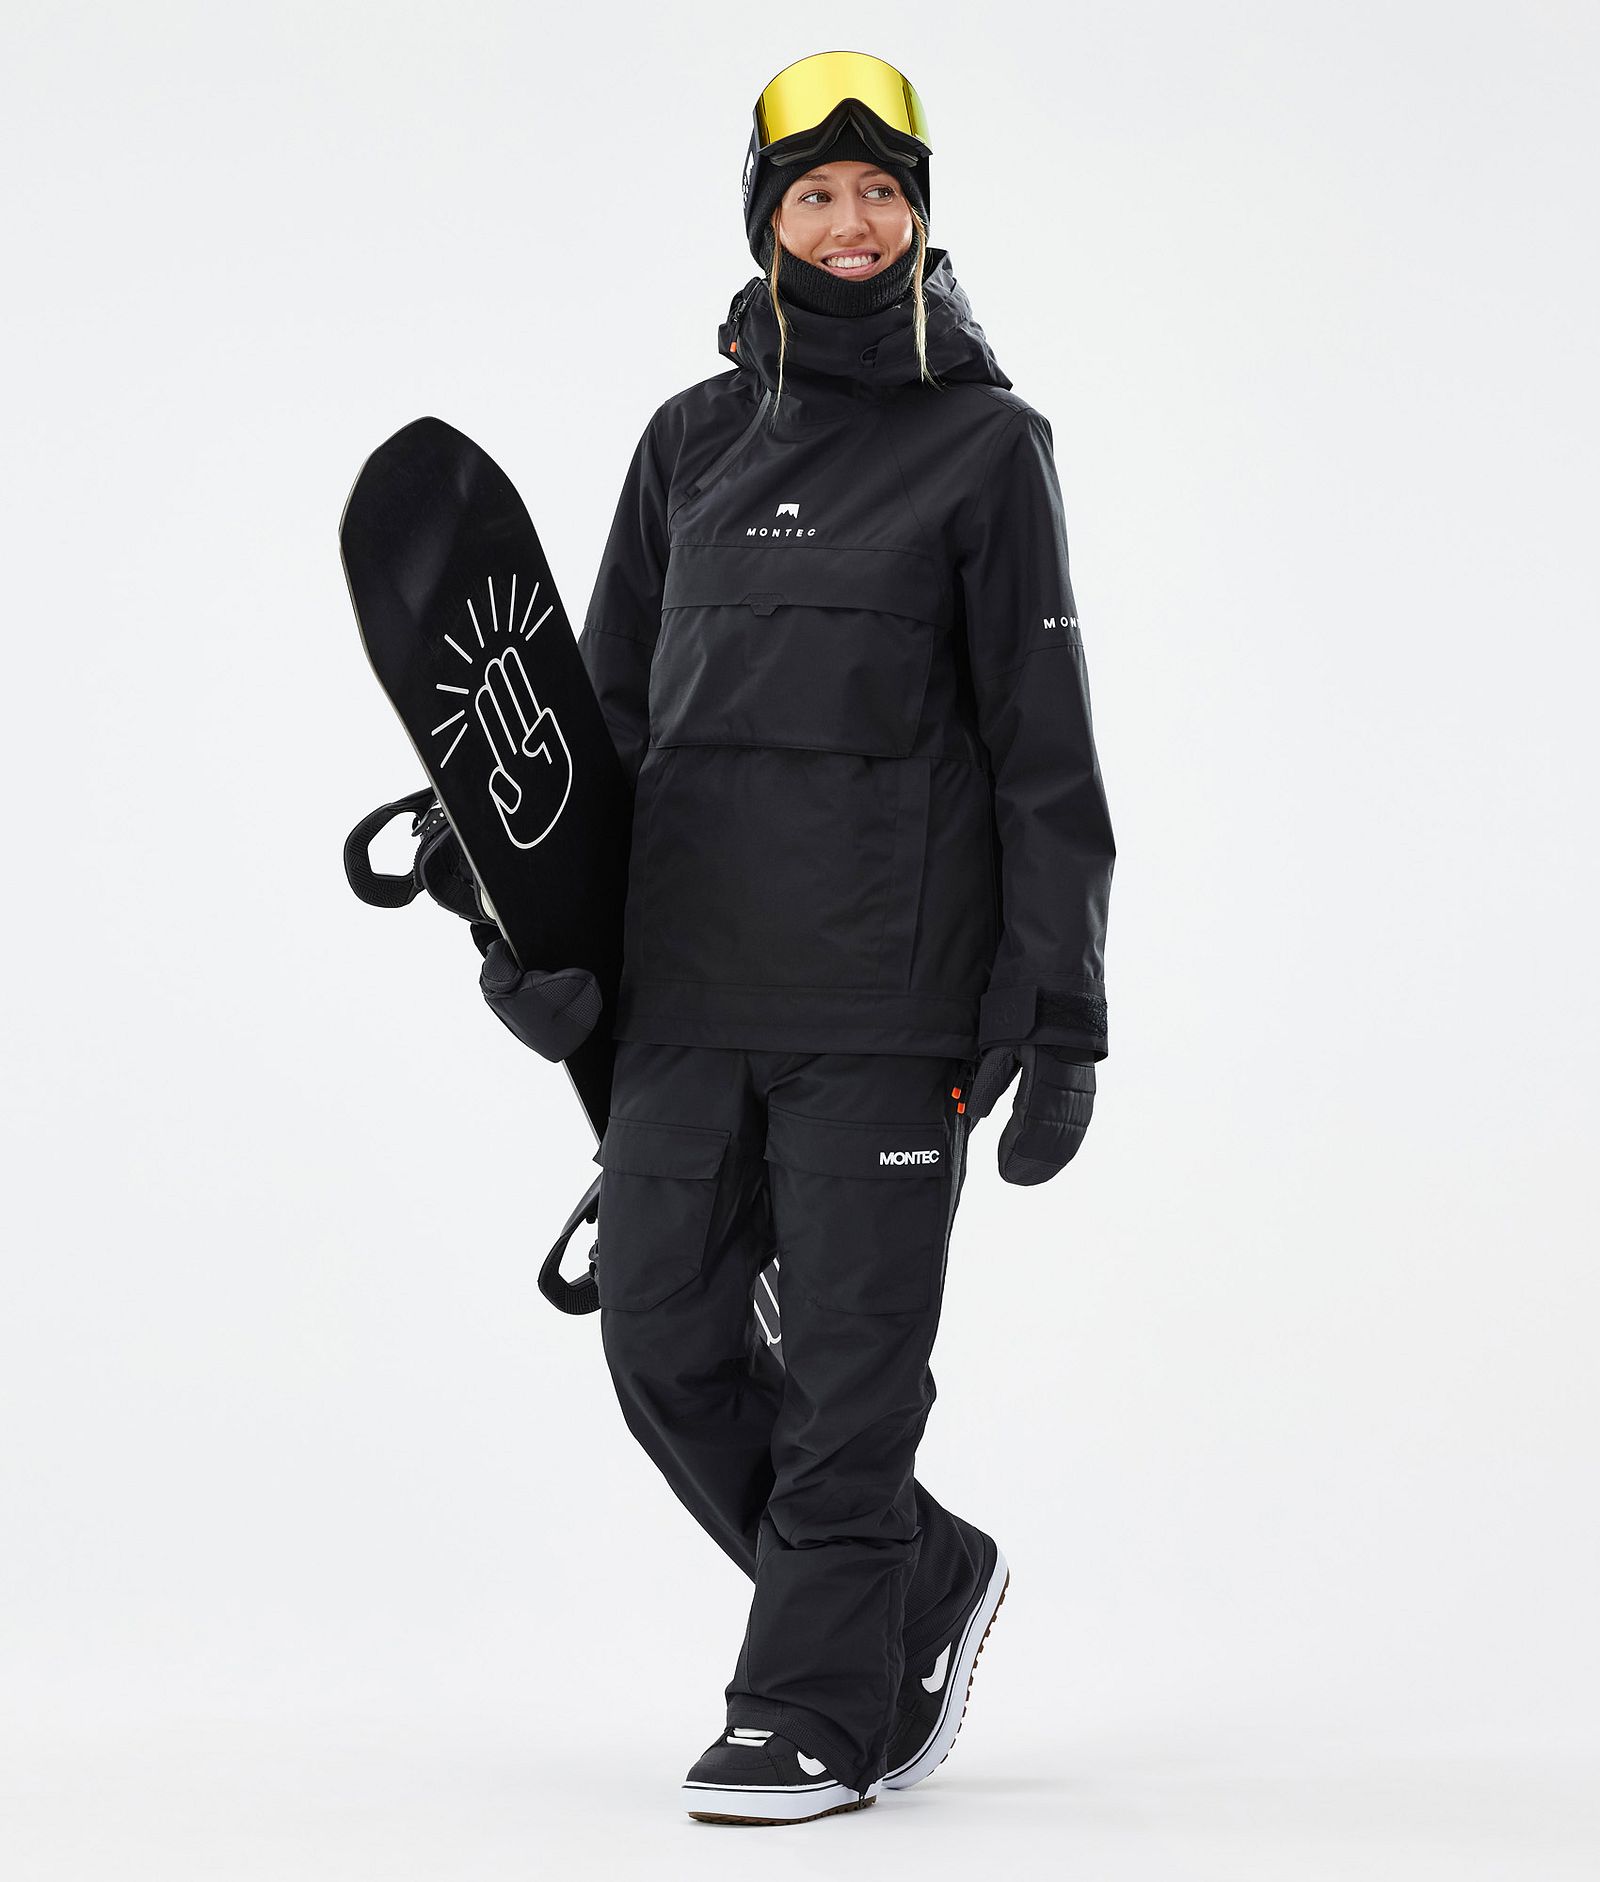 Montec Fawk W Kalhoty na Snowboard Dámské Black